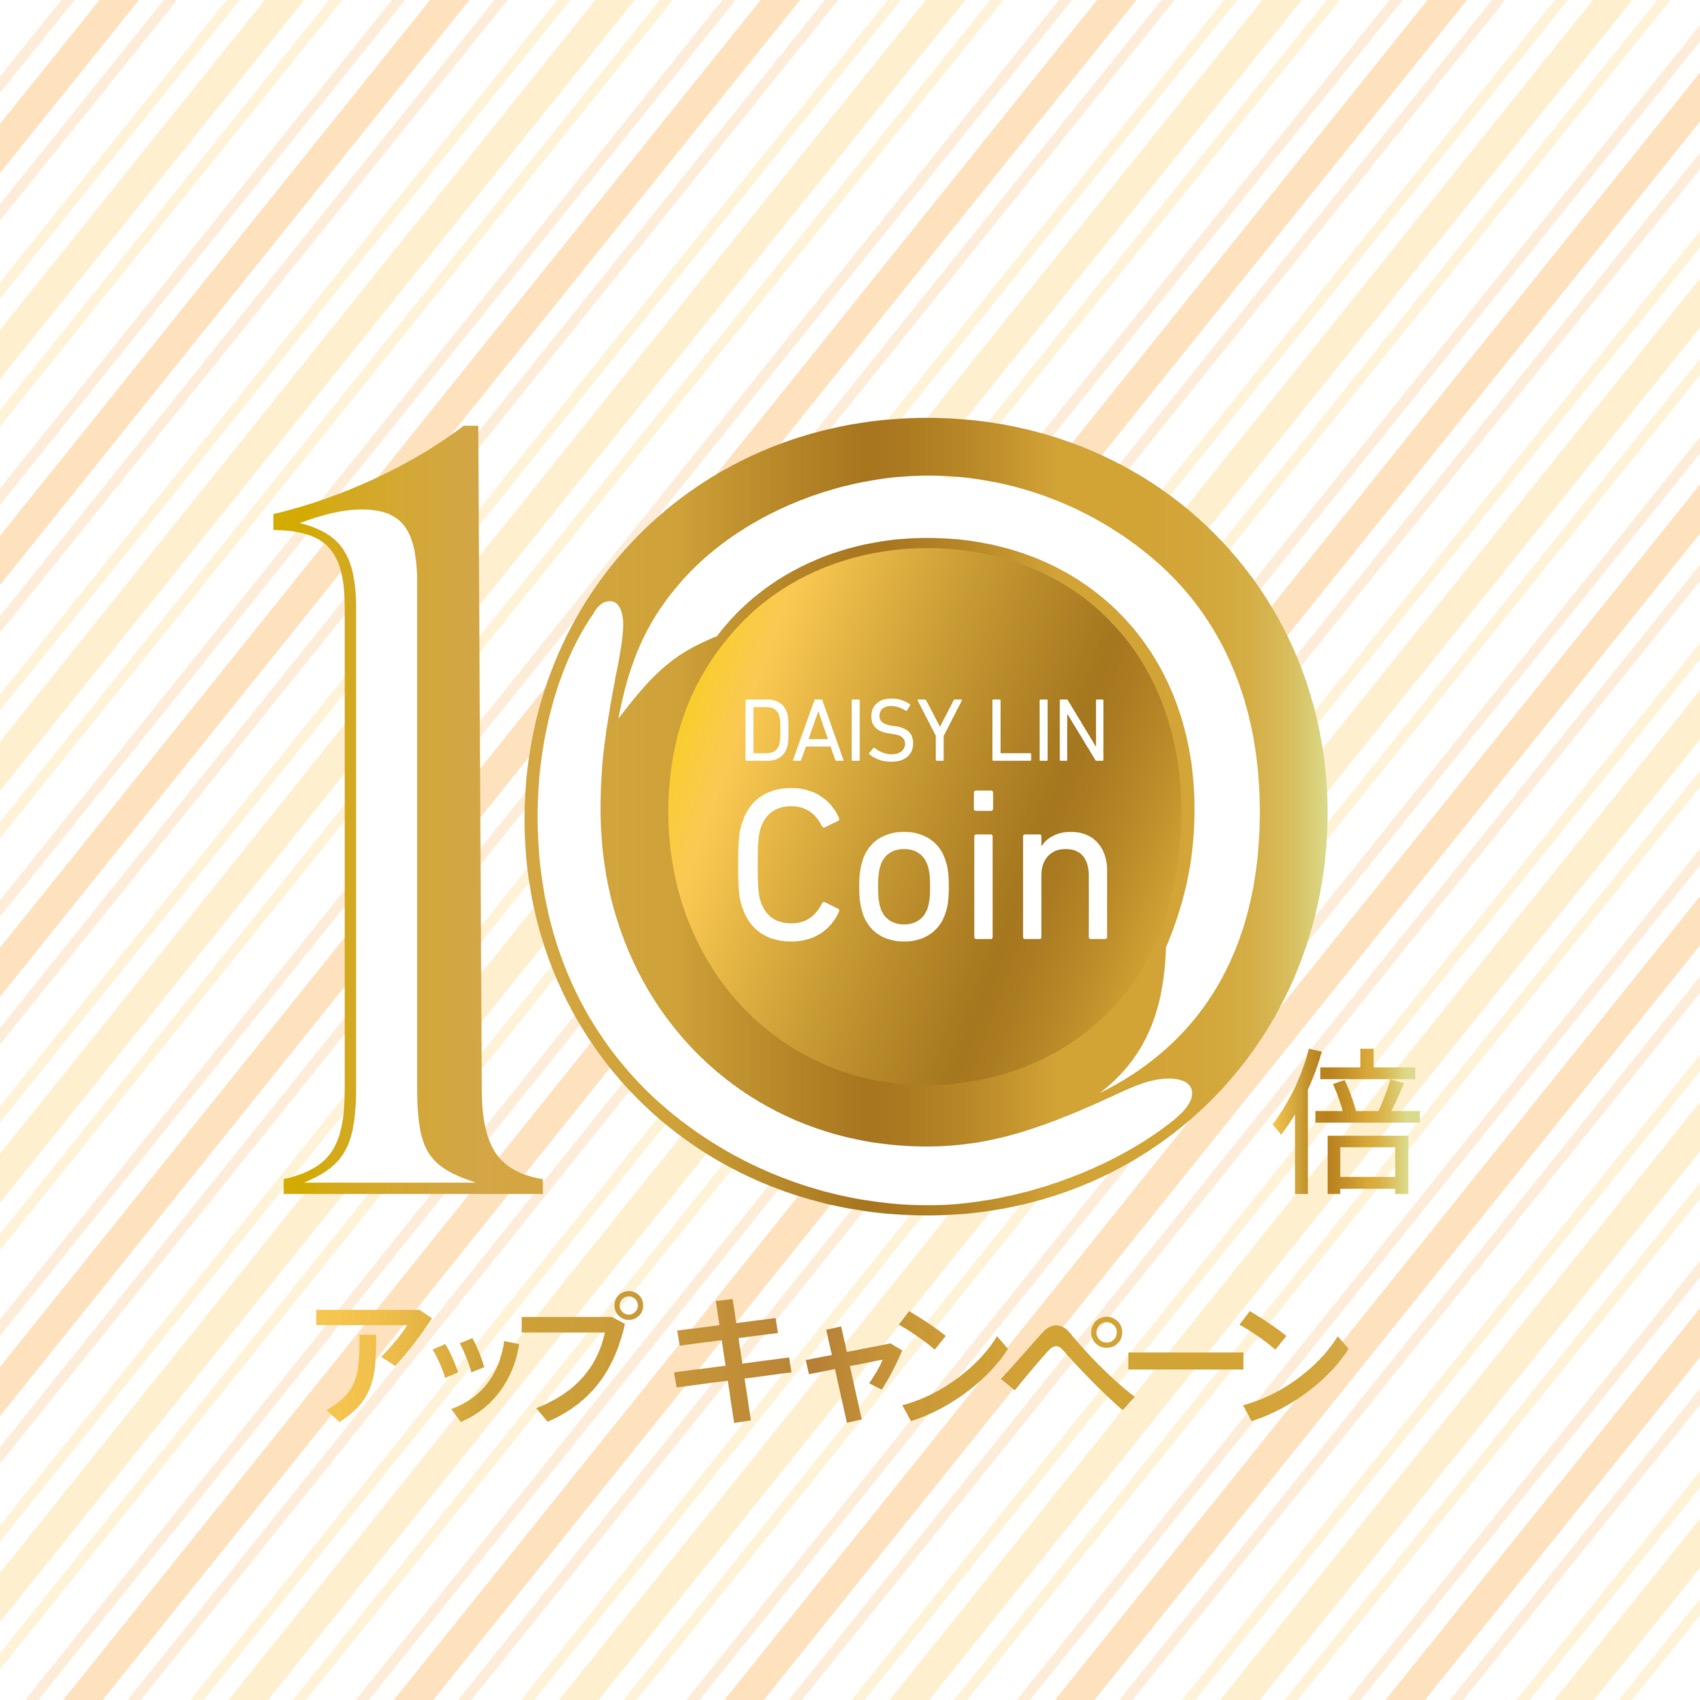 DAISY LIN-Coin 10倍アップキャンペーン！！